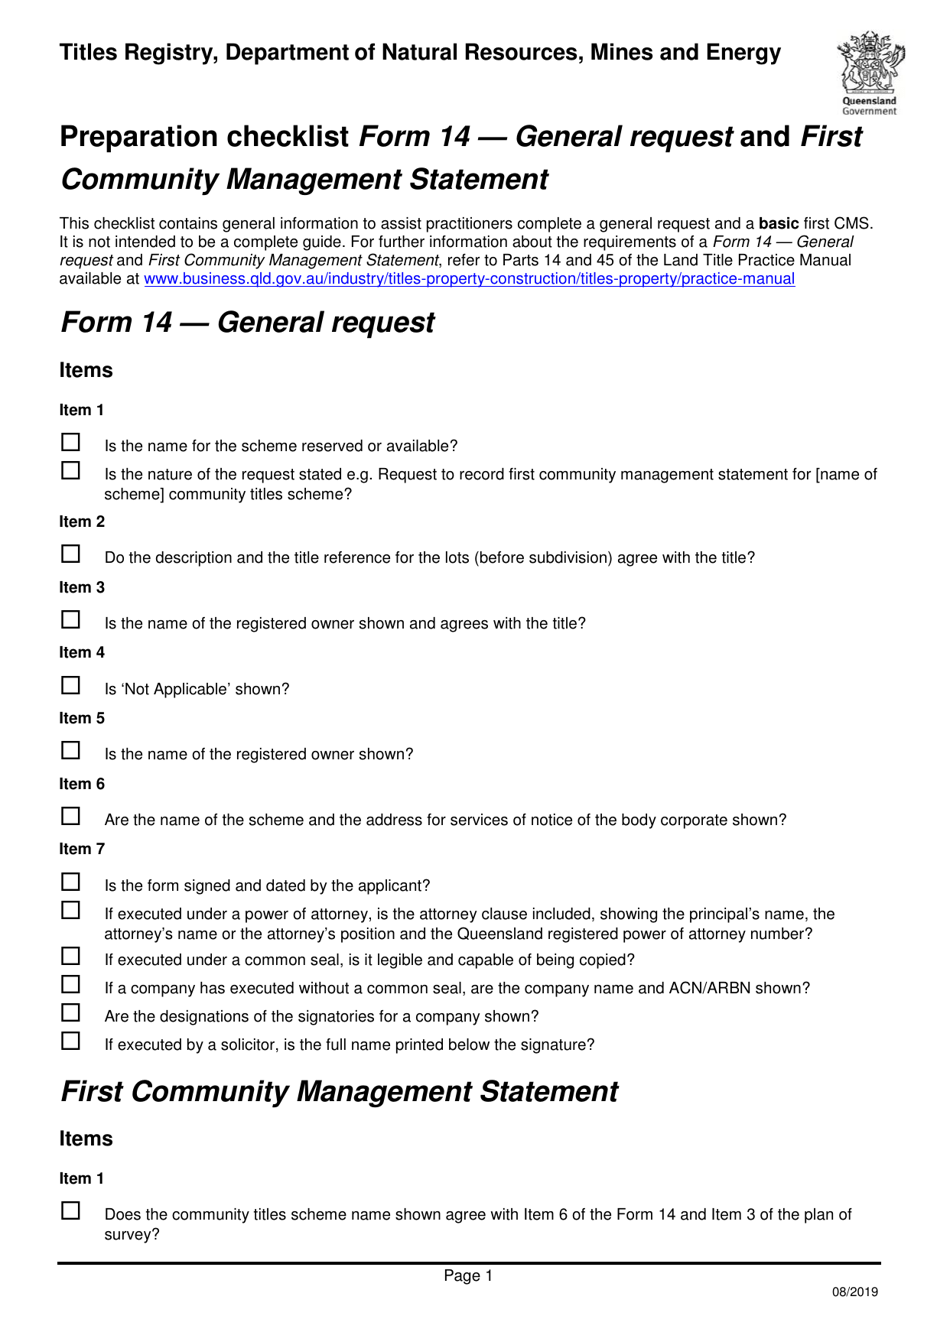 Form 14 Preparation Checklist - General Request and First Community Management Statement - Queensland, Australia, Page 1